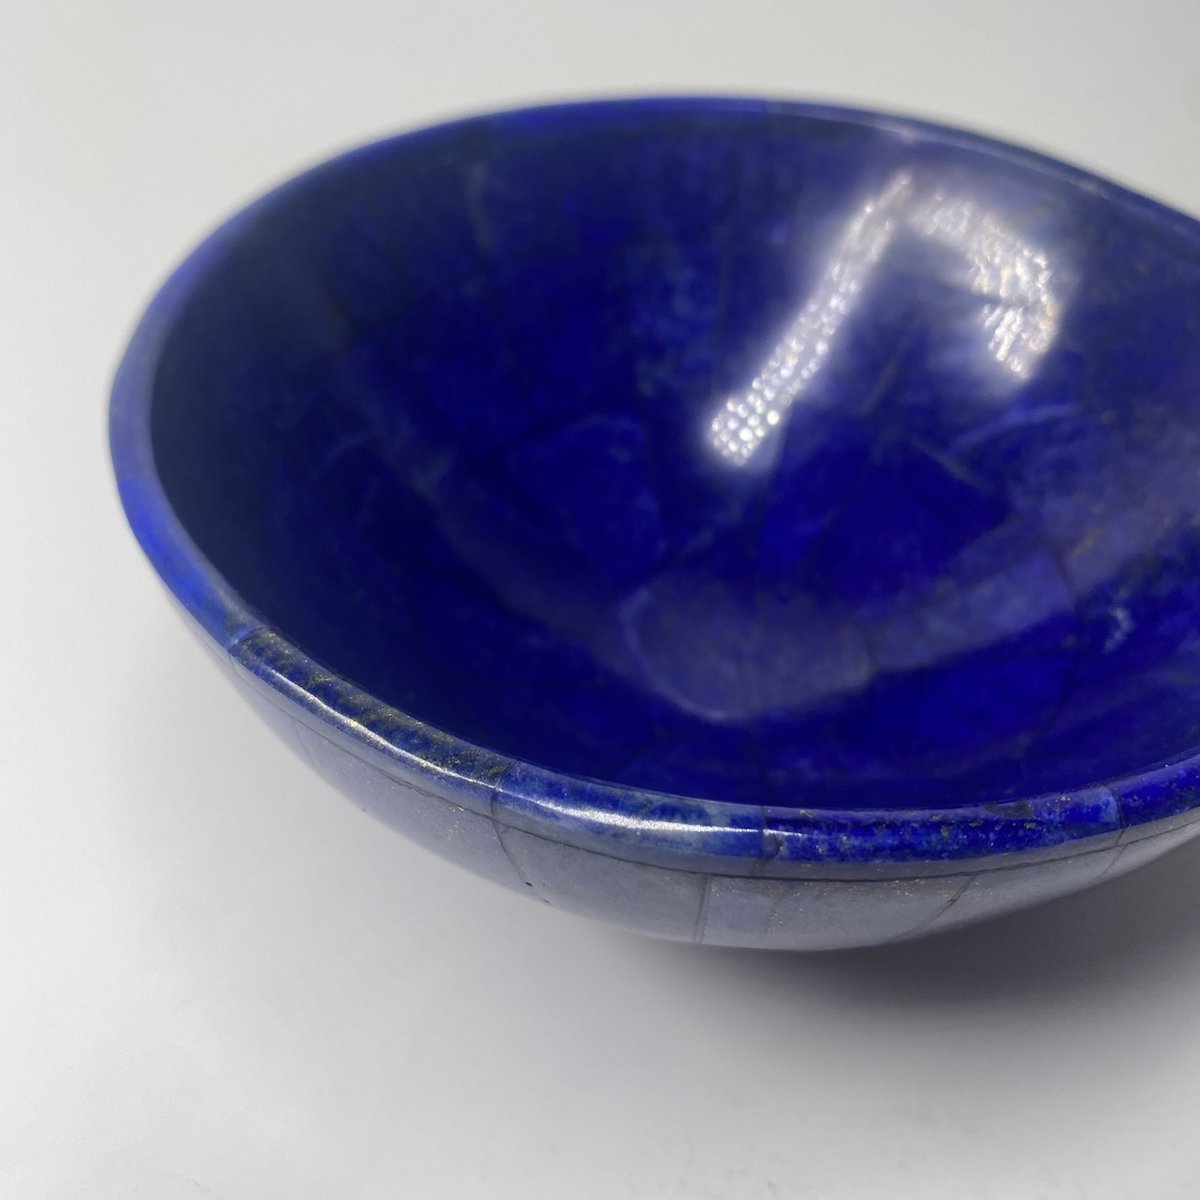 A+++ Natuurlijke Lapis Lazuli bowl/Kom 250 mm - 1,34 kg Handgemaakt - Blauw - Helend